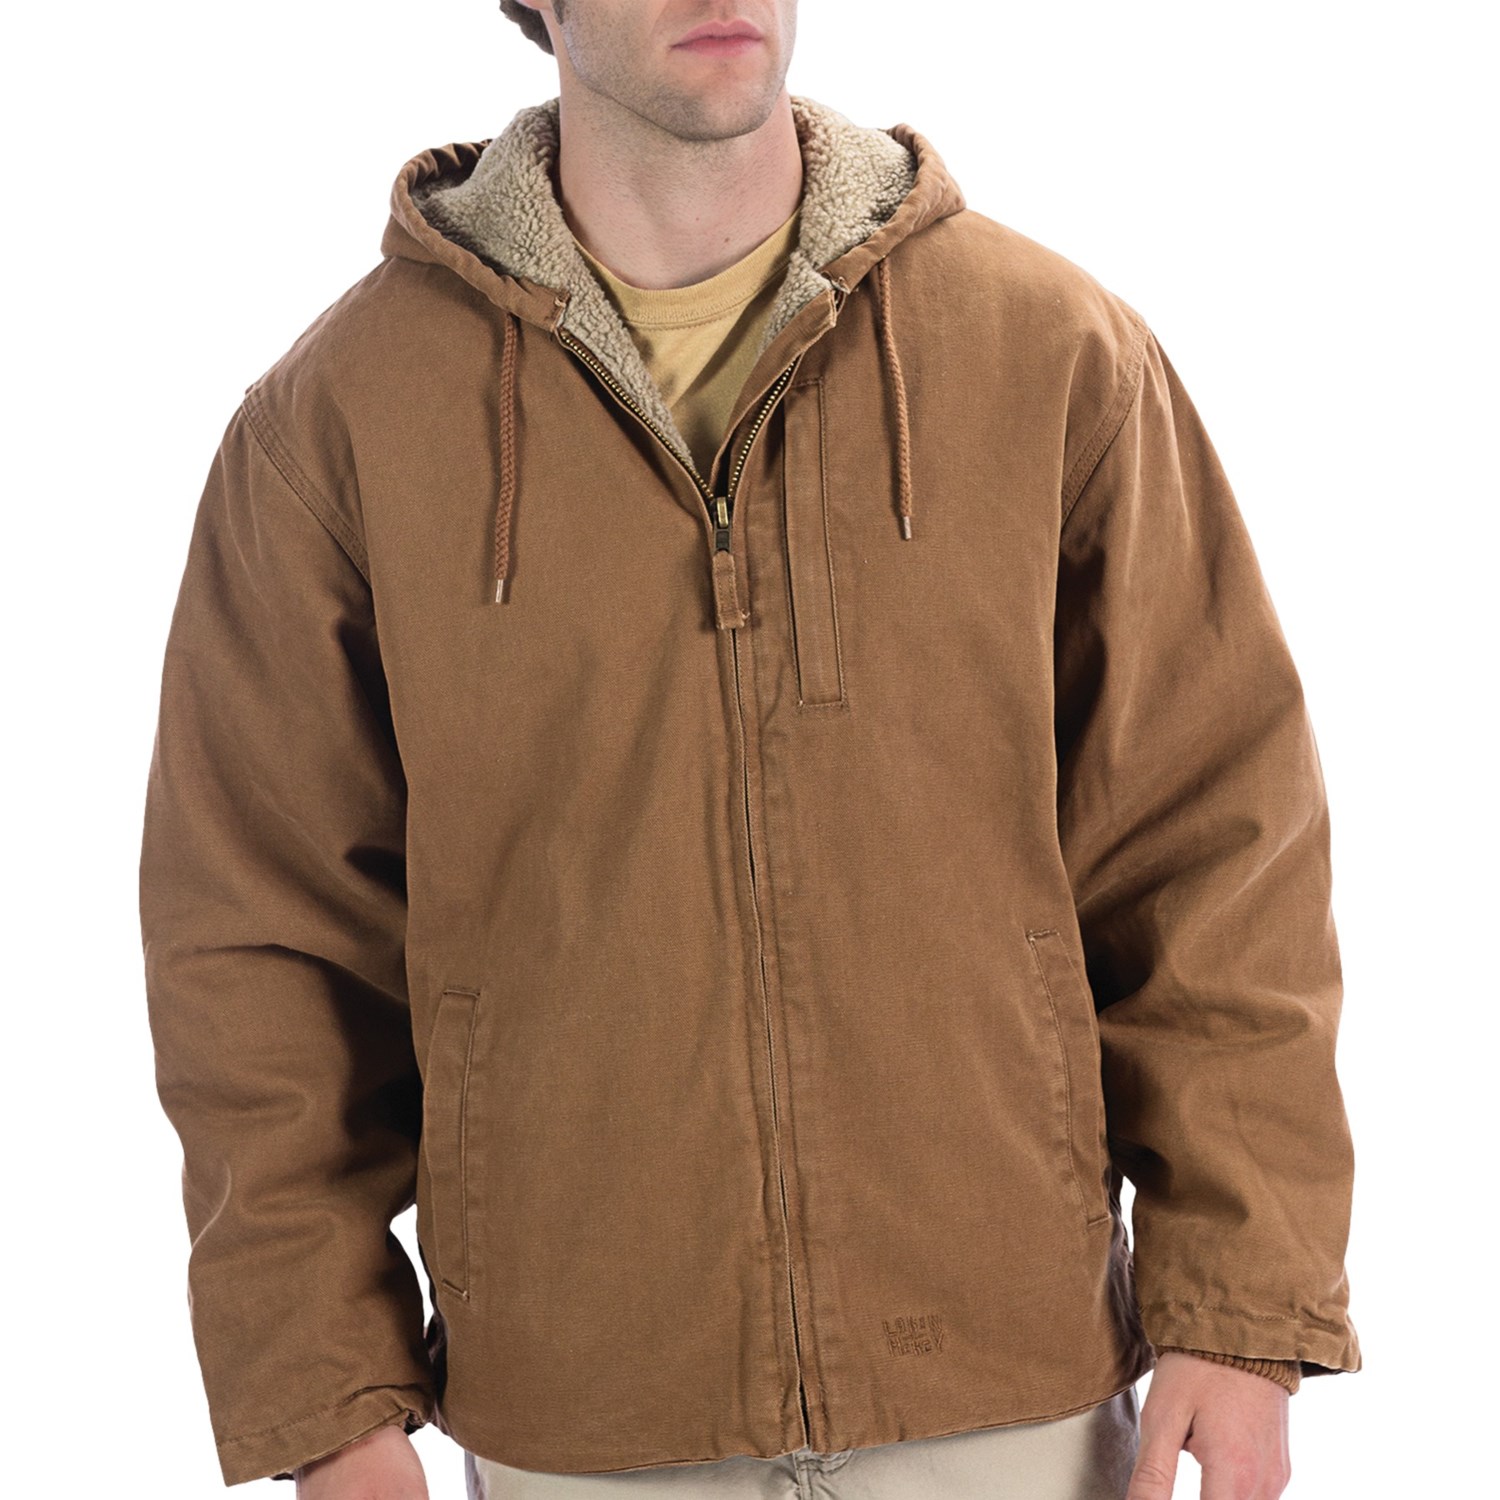 Lakin McKey Berber Lined Jacket - Hooded (For Men) - Save 75%